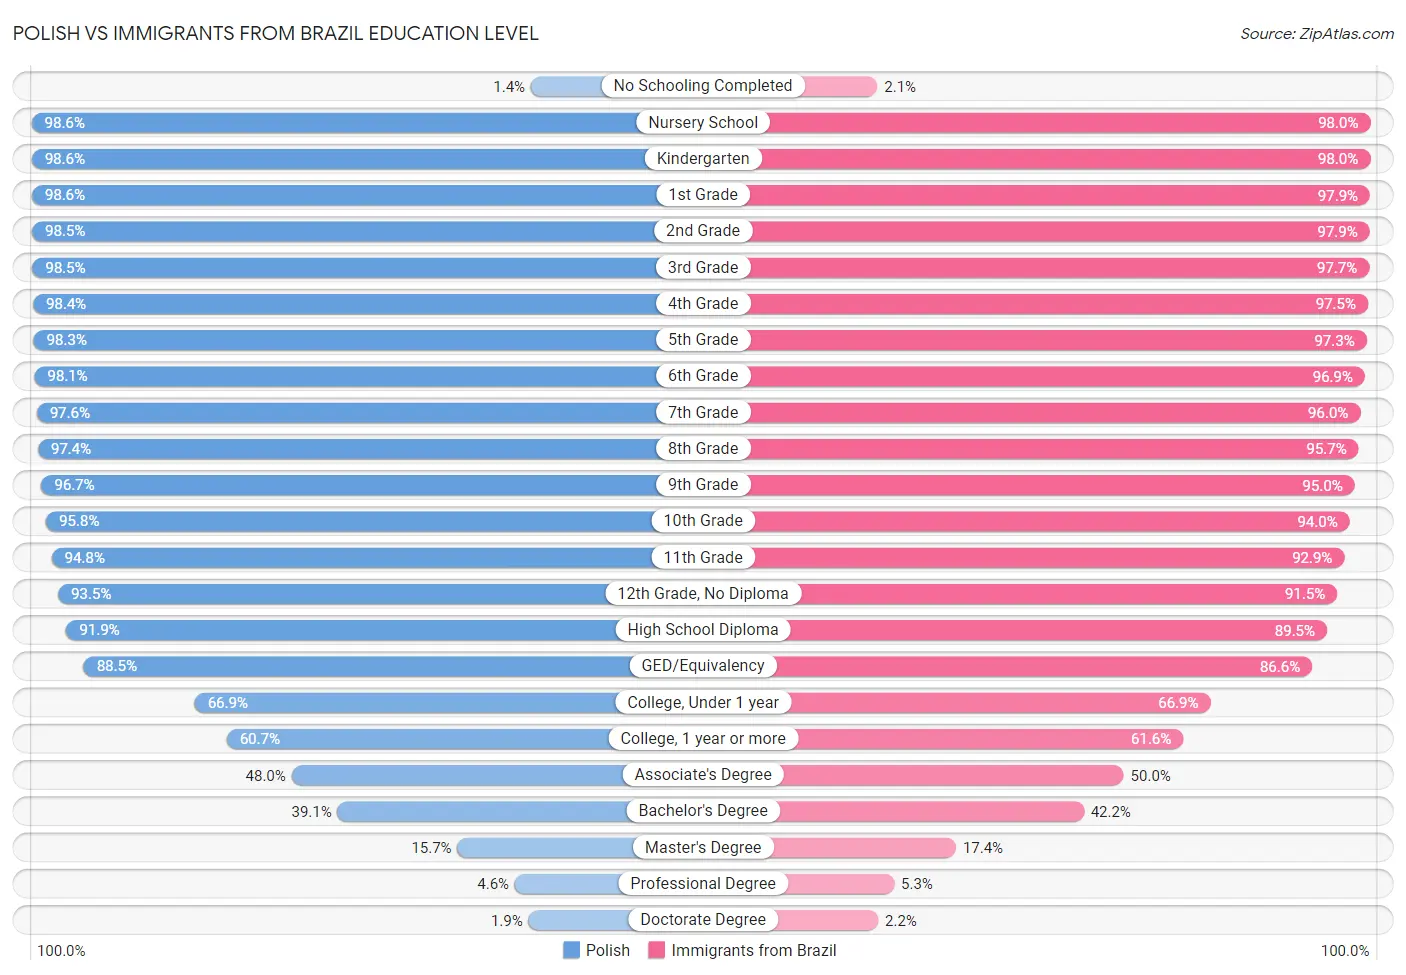 Polish vs Immigrants from Brazil Education Level